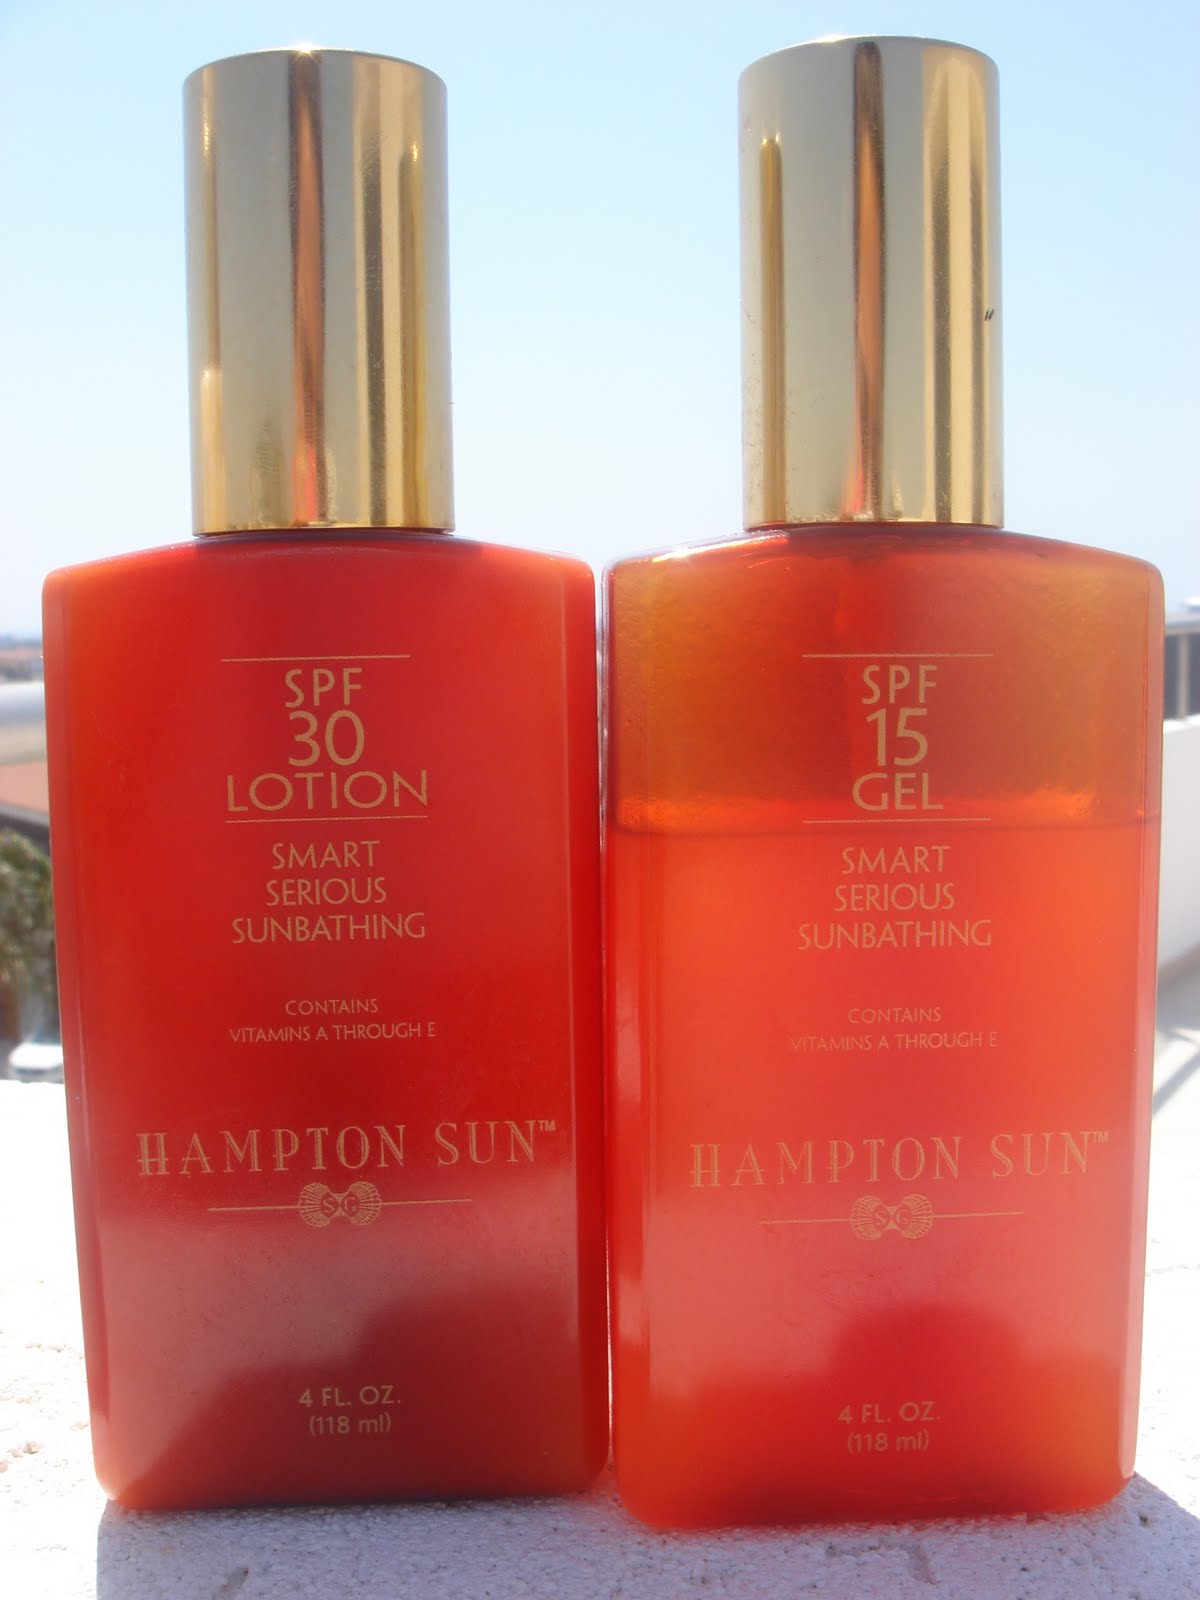 Hamptons Sun products